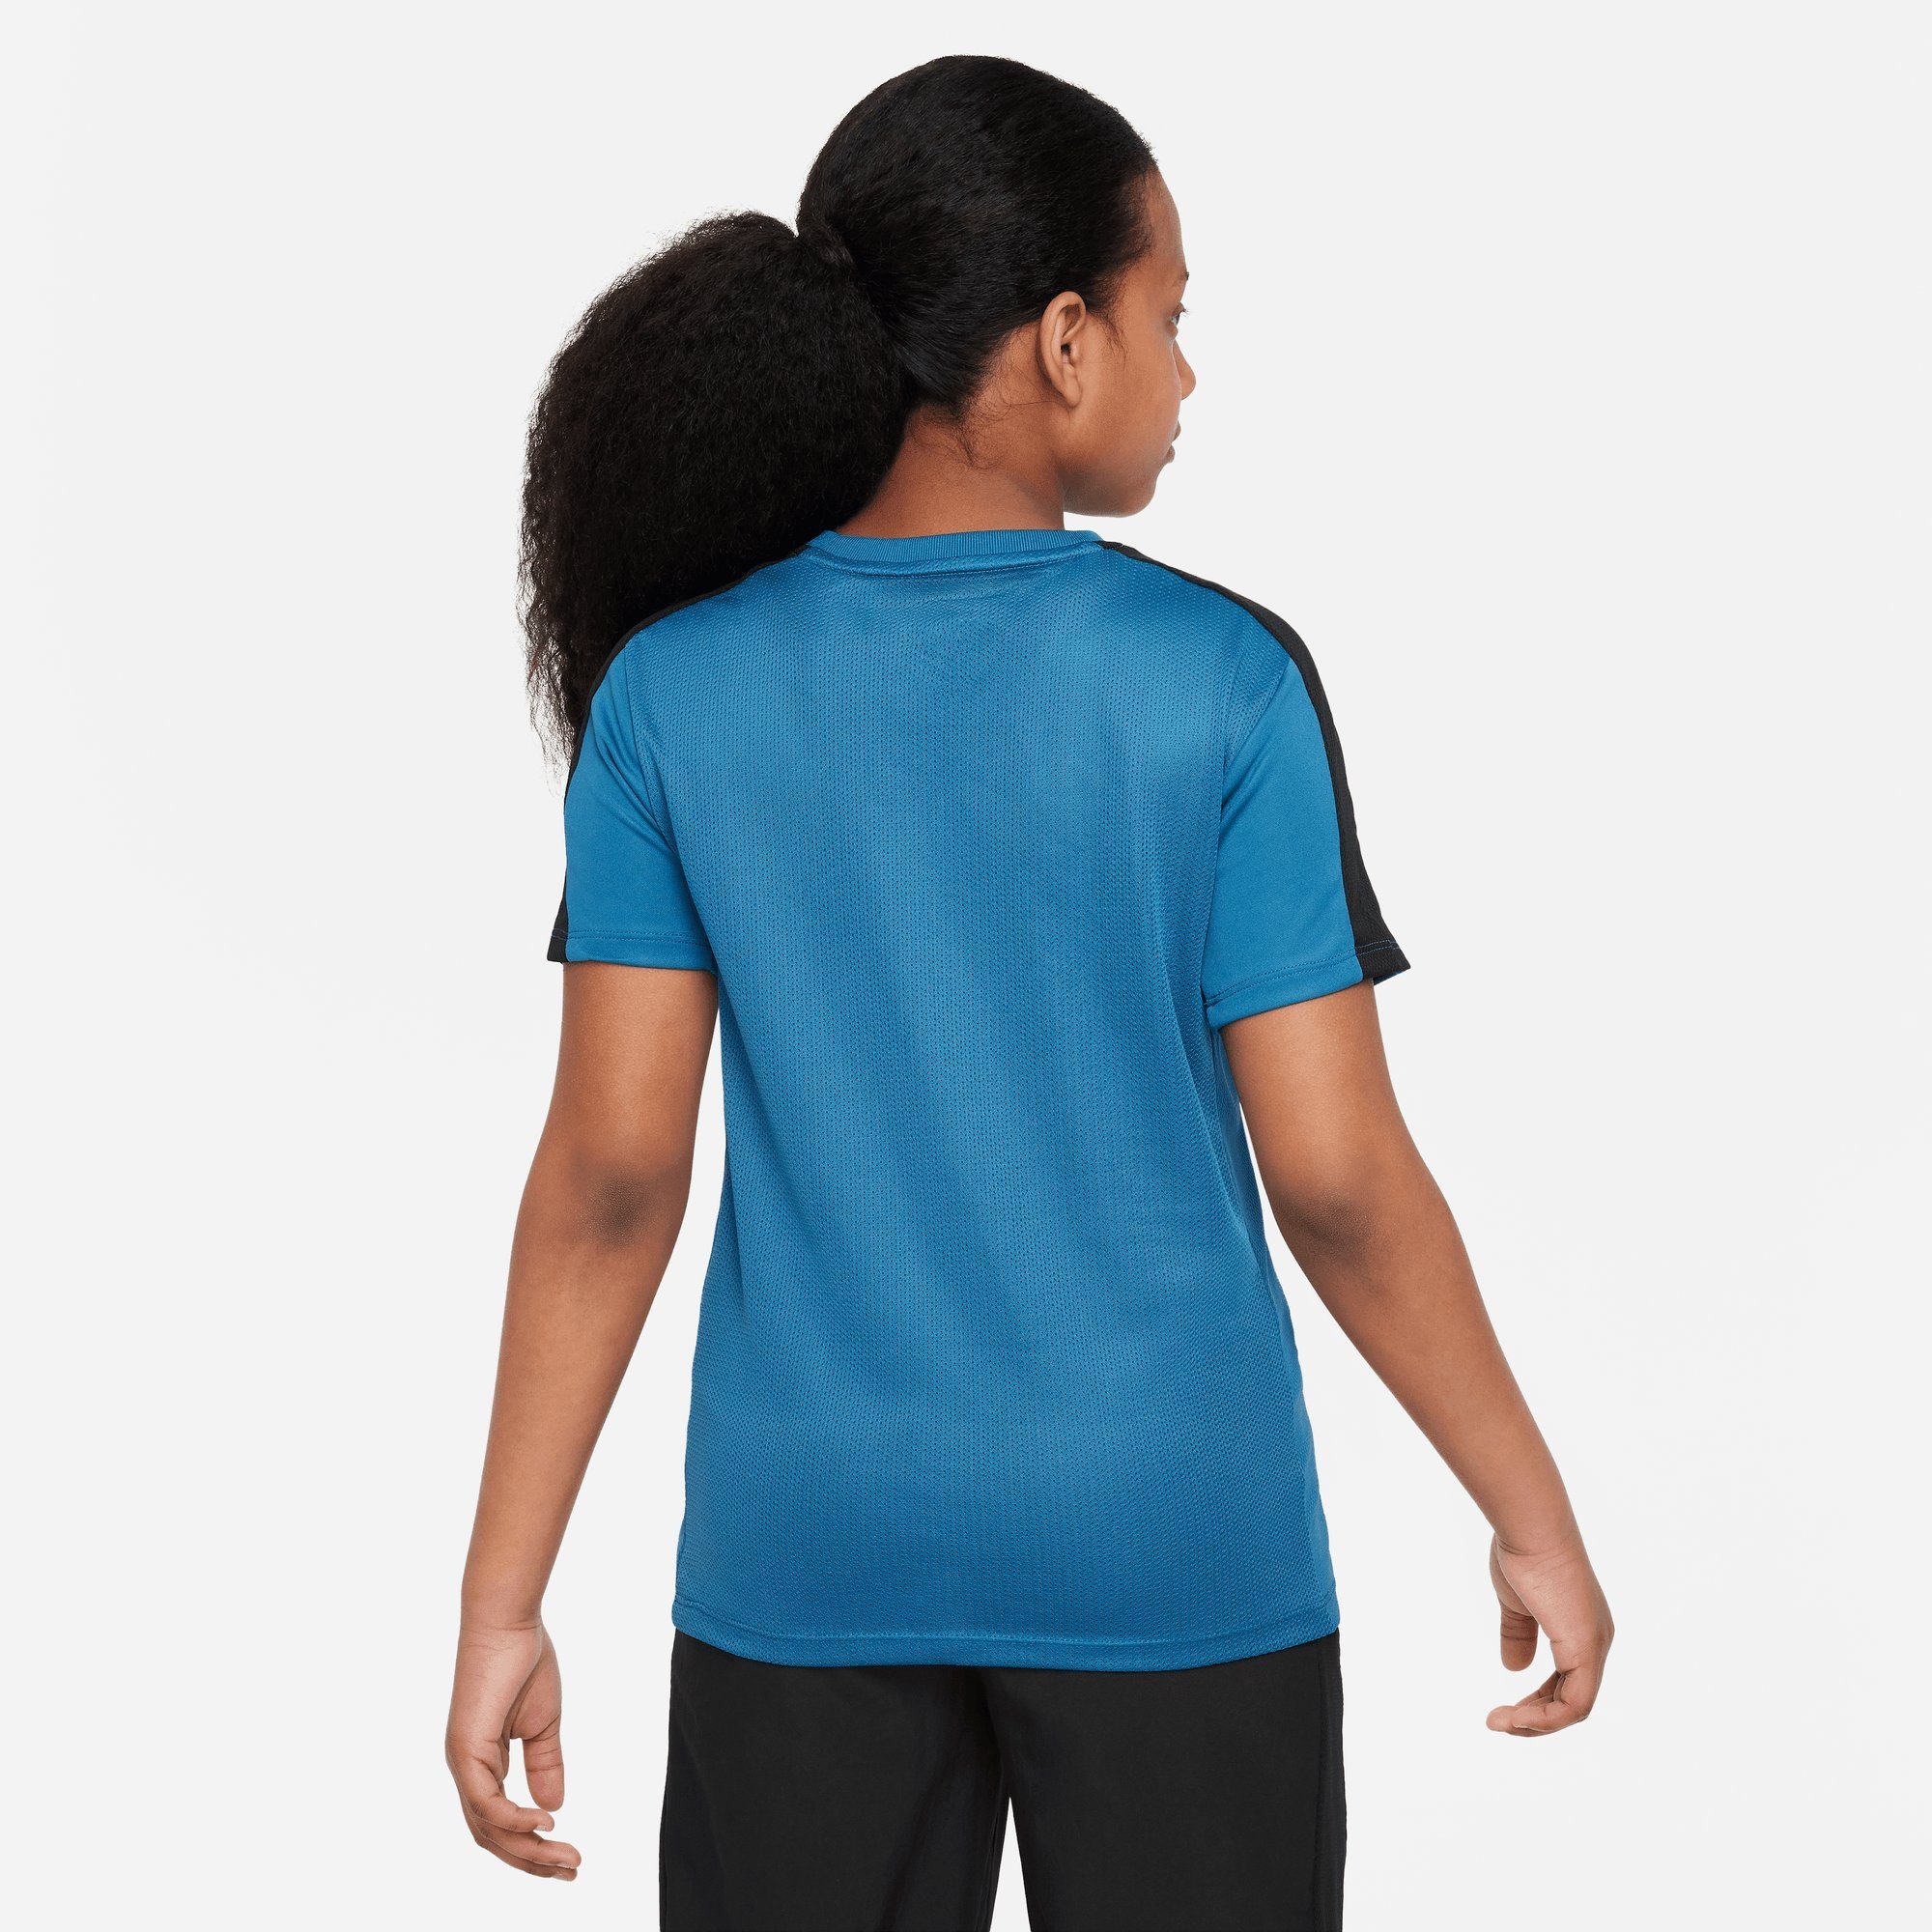 ACADEMY INDUSTRIAL DRI-FIT KIDS' Trainingsshirt BLUE/BLACK/BLACK TOP Nike